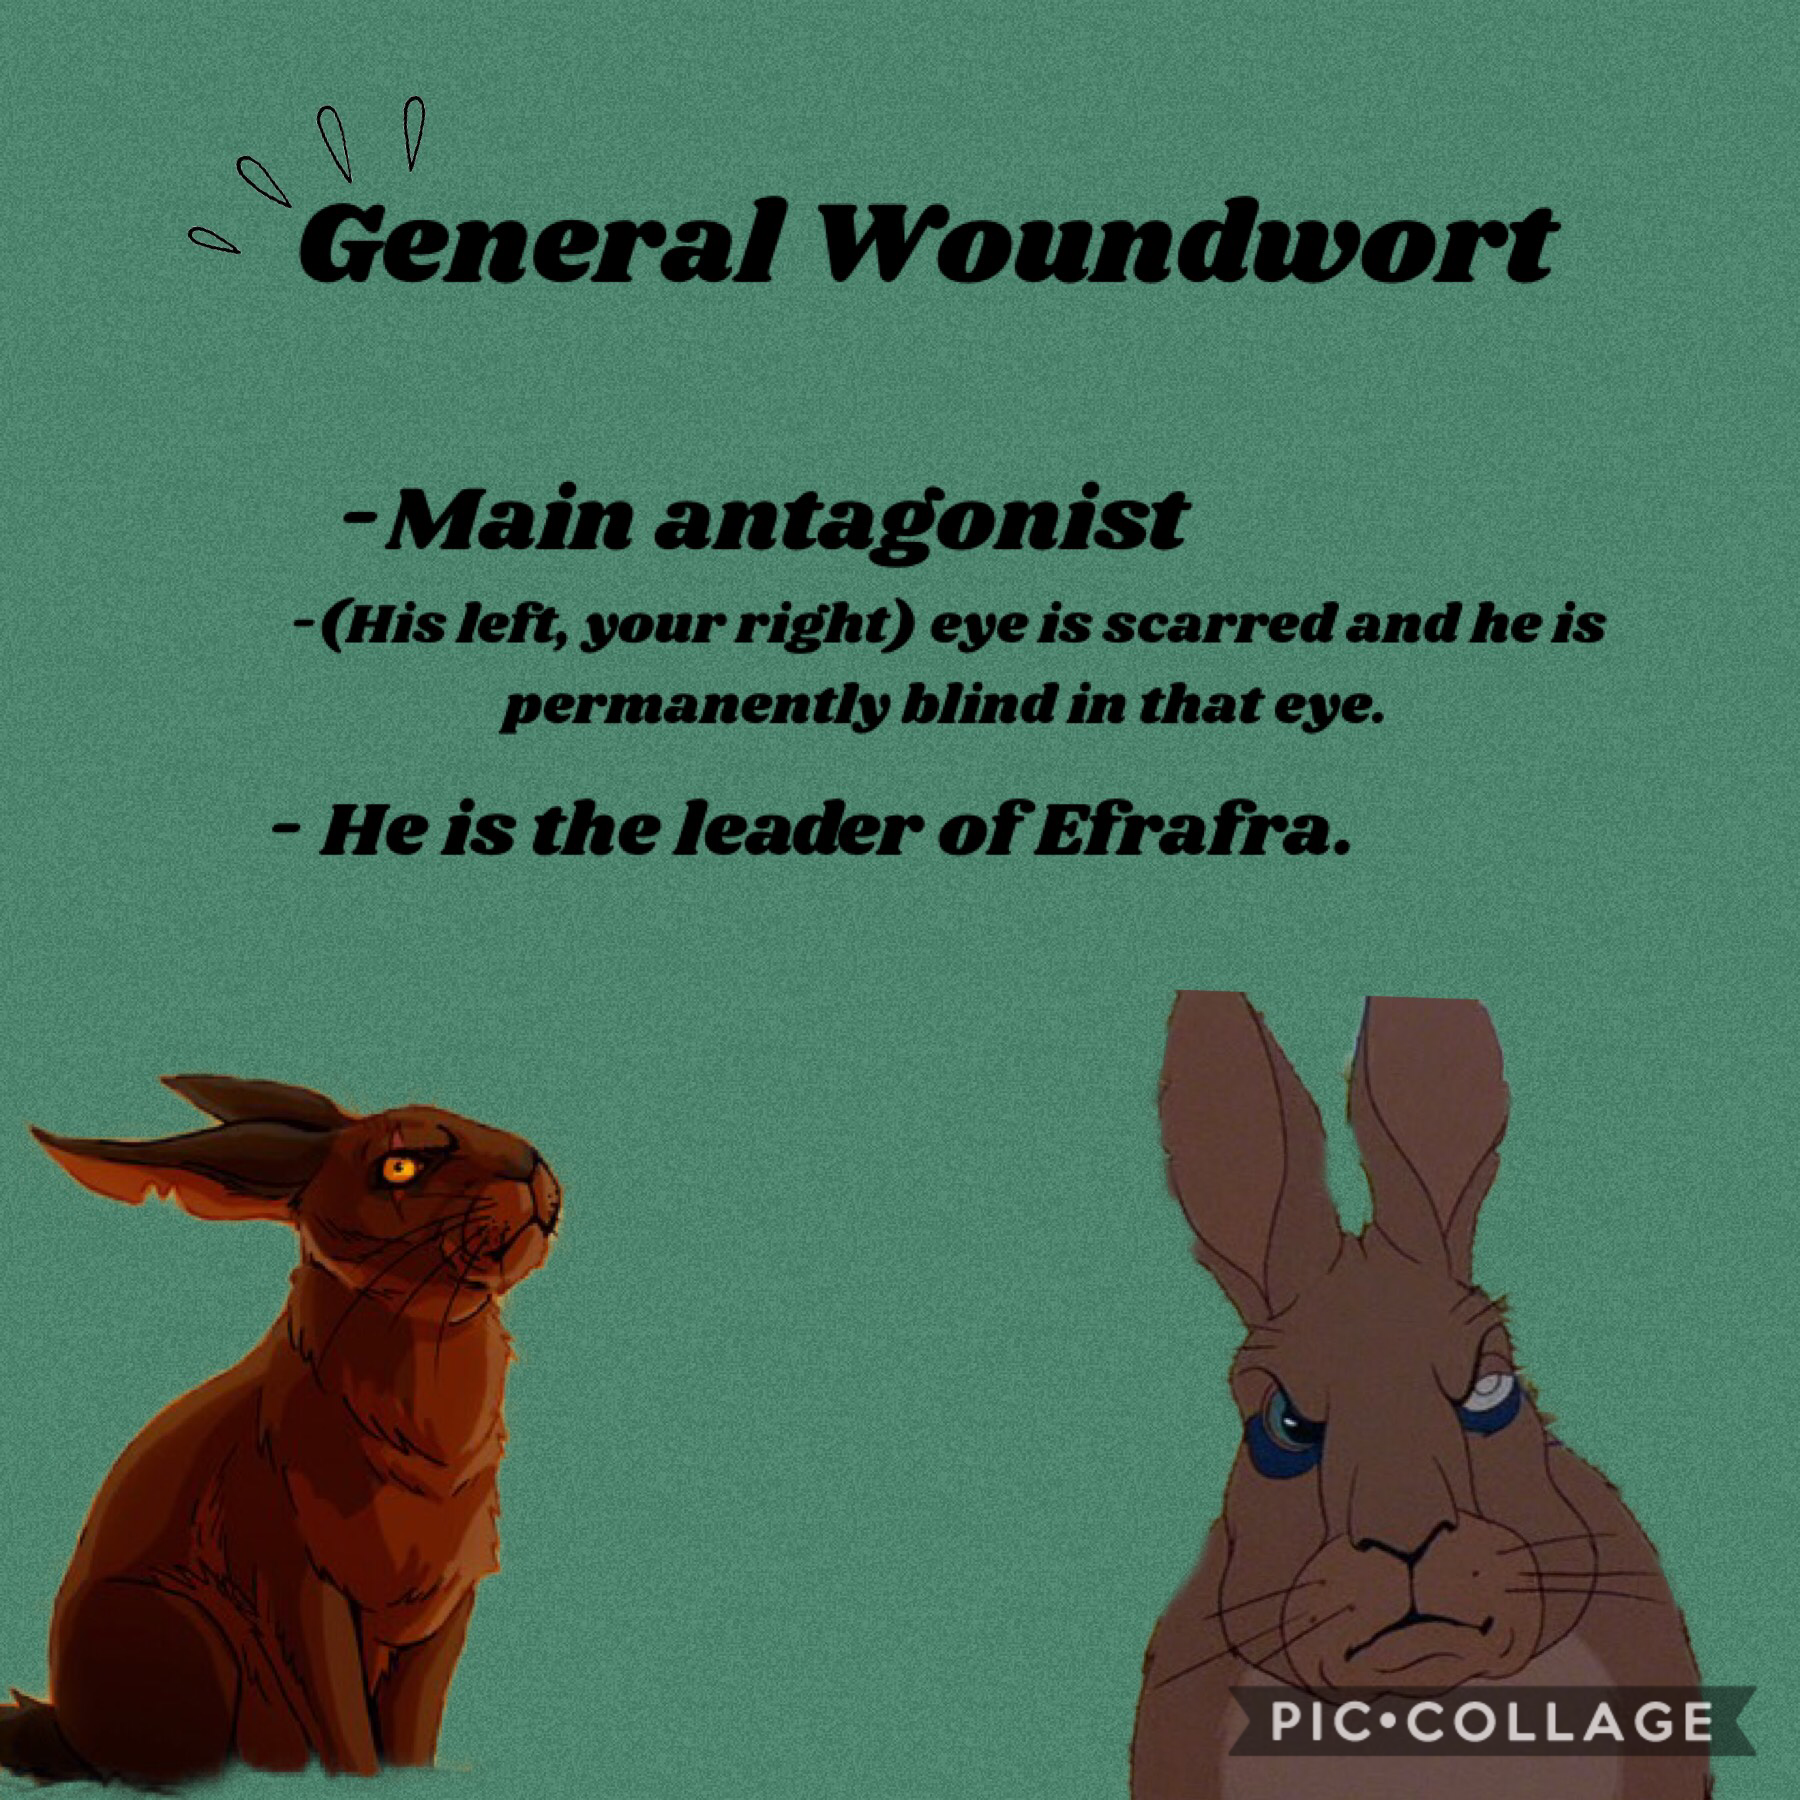 General Woundwort